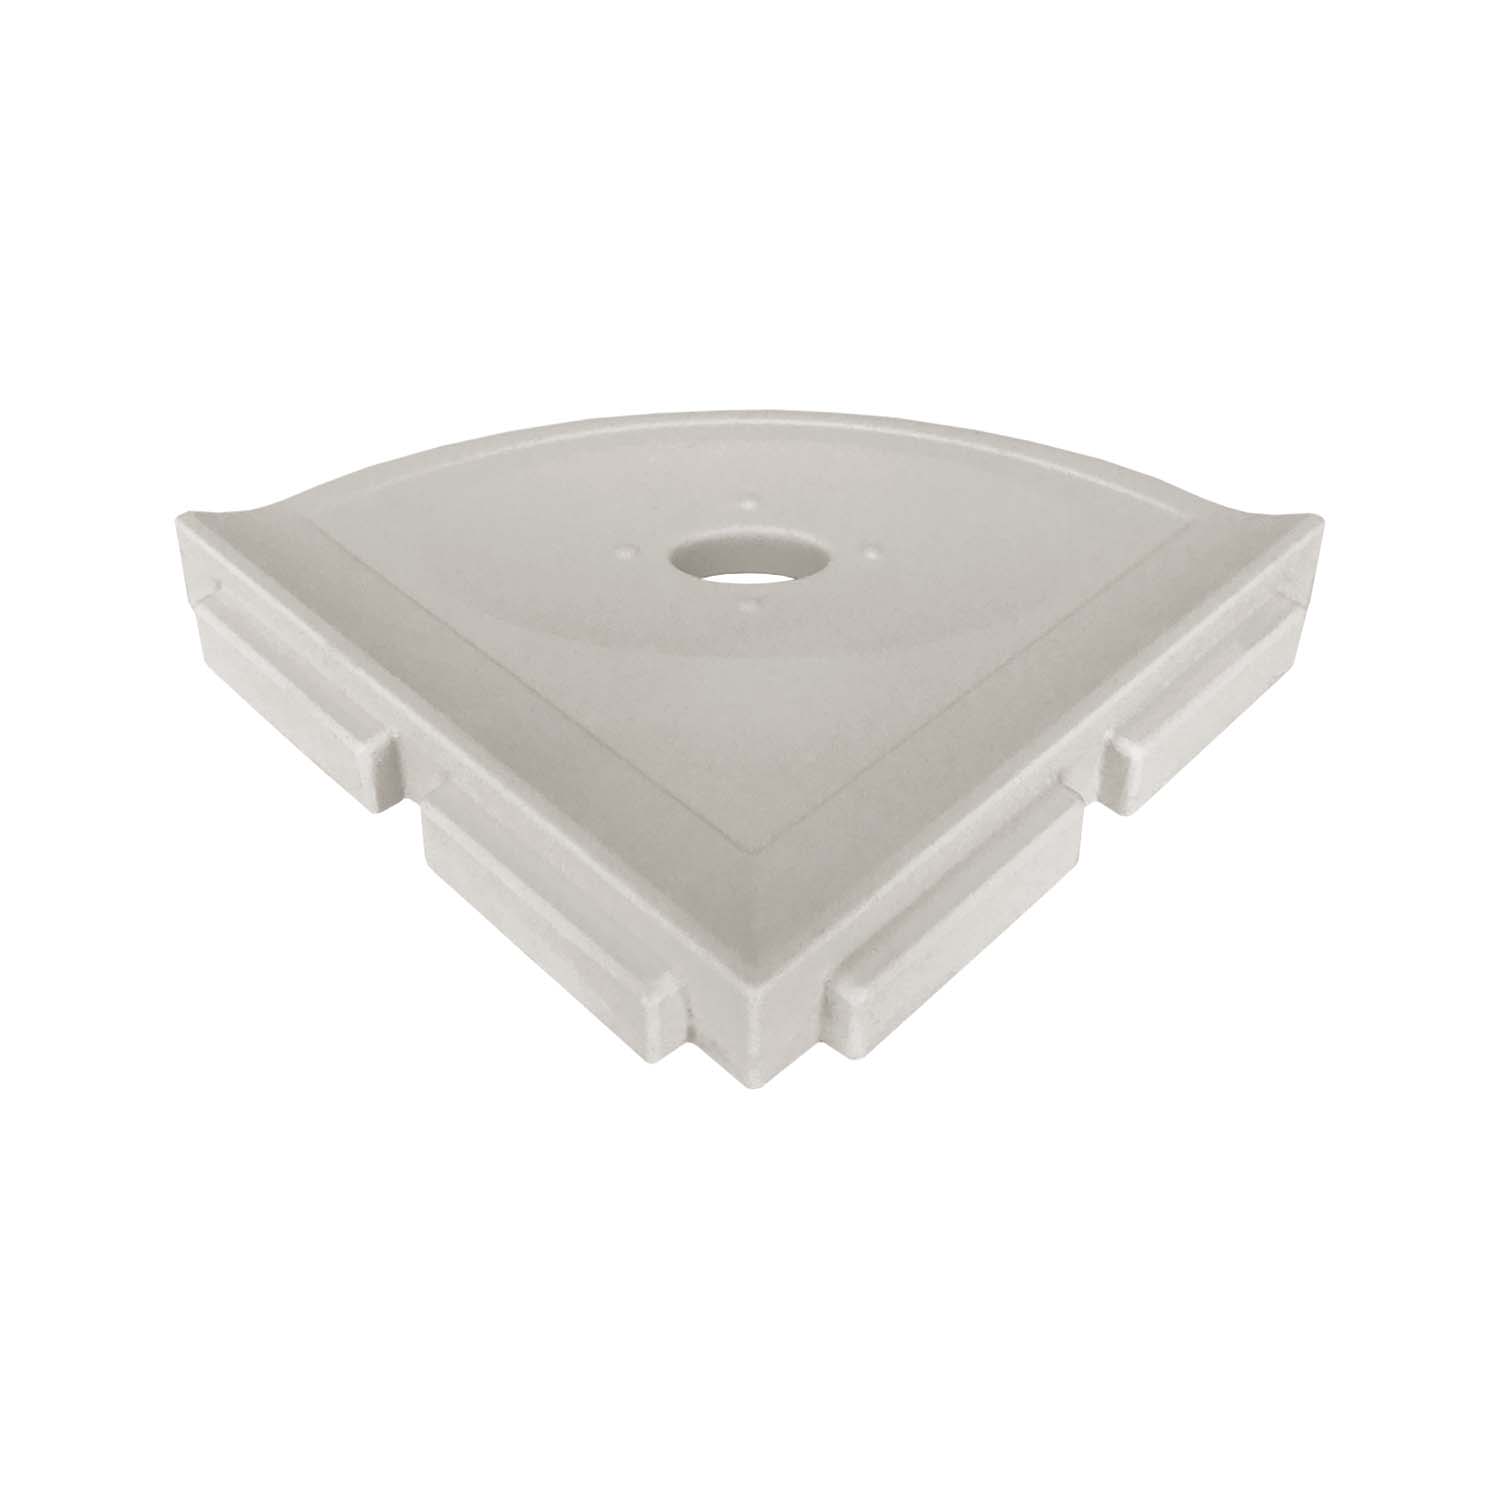 Questech Metro Lugged 5 inch Corner Shelf Soap Dish, Bright White Polished, Size: 5 Corner Soap Dish